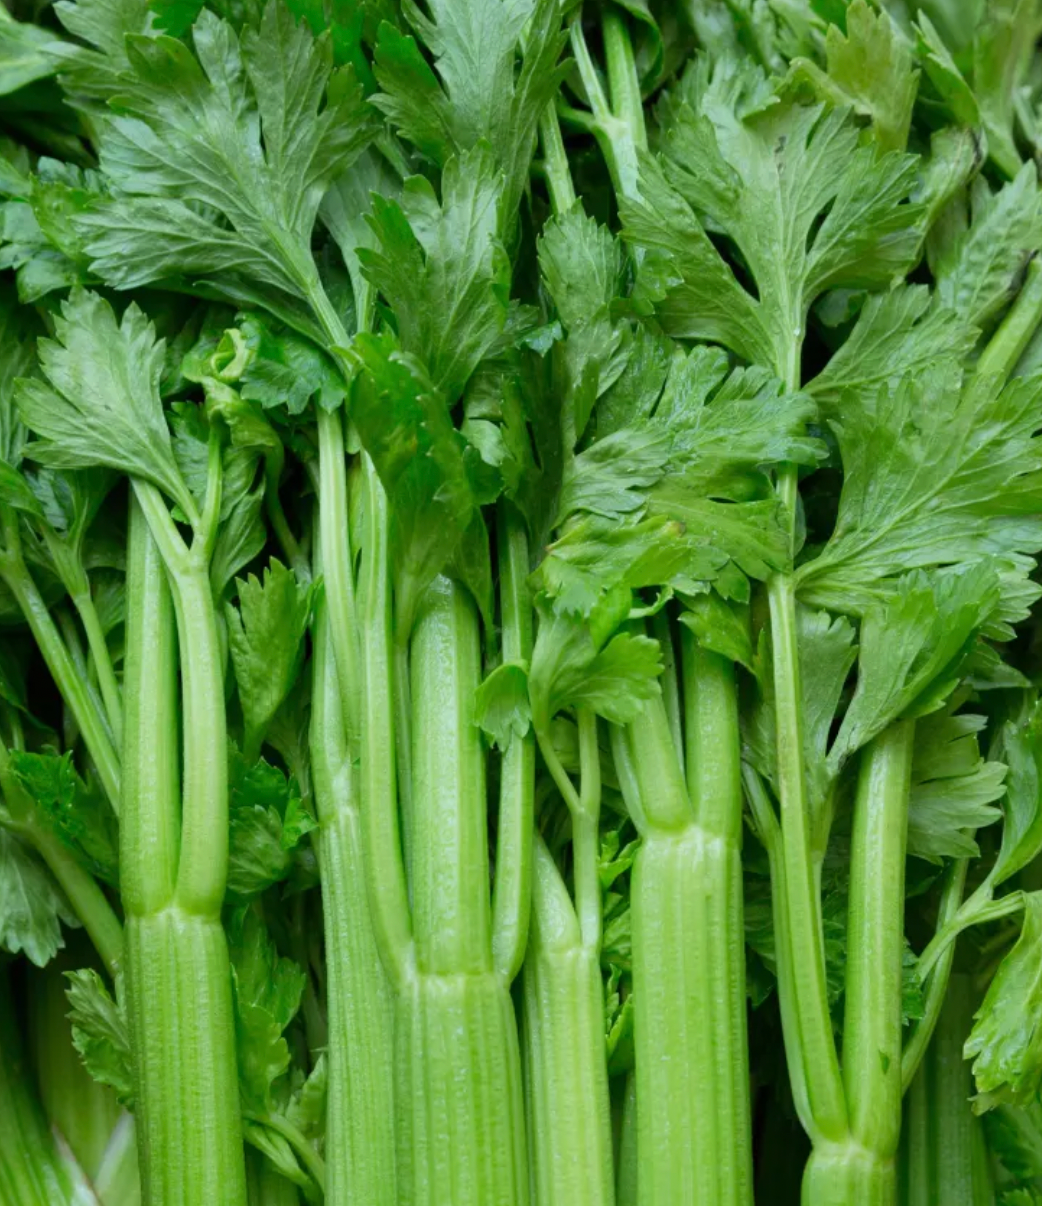 Celery - each